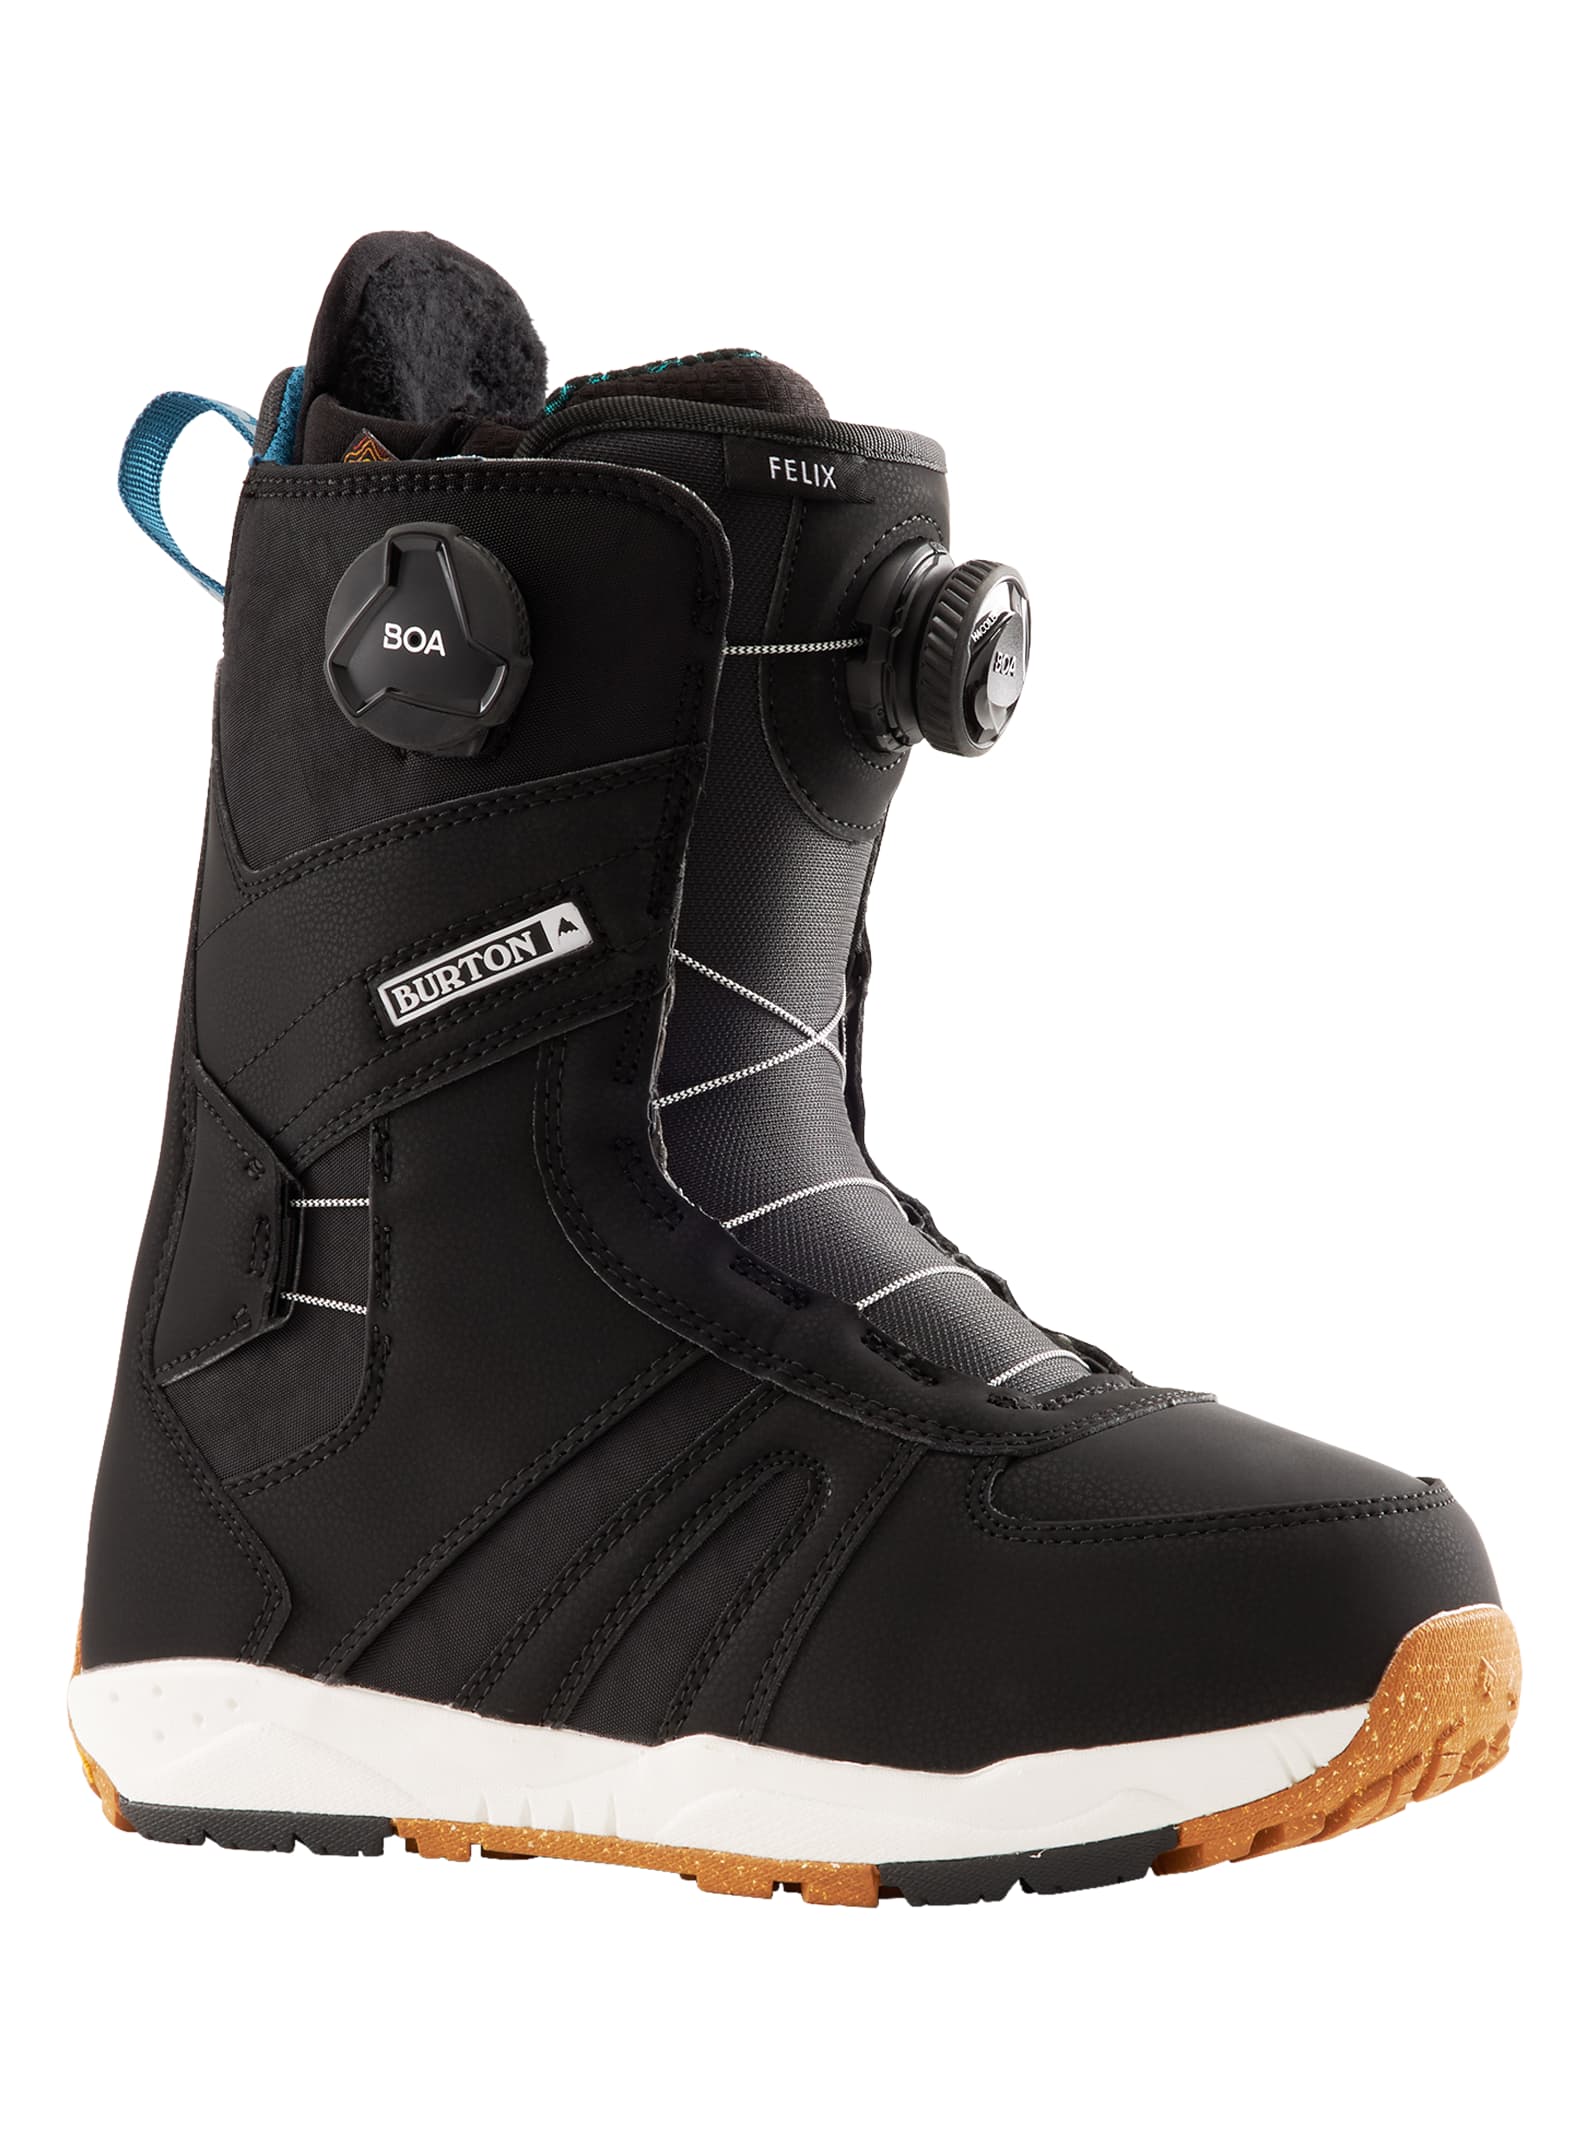 Women's Snowboard Boots | Burton Snowboards US